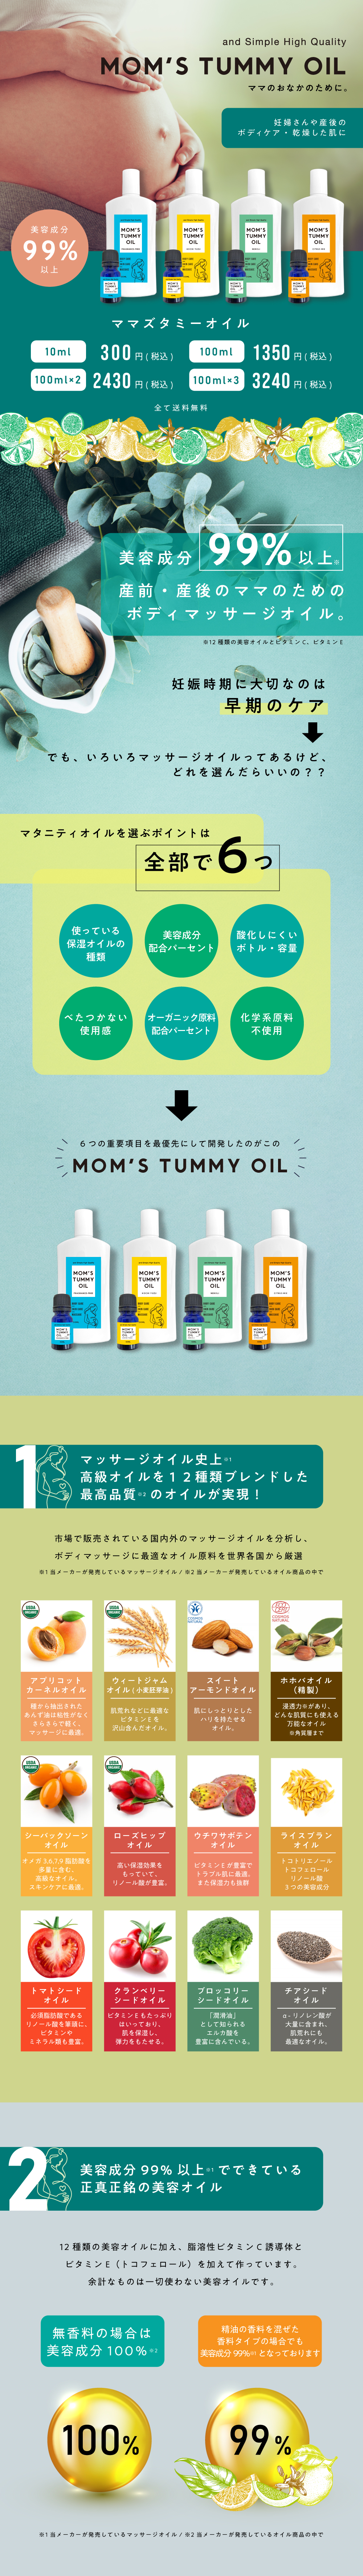 Mom's tummy oil ママズ タミーオイル 100ml 3本セット / SH 99%以上美容成分 オーガニック 原料94％  マタニティオイル マザーズ / tg_smc +lt3+ :10045760:自然派美容食品 アンドエスエイチ - 通販 - Yahoo!ショッピング